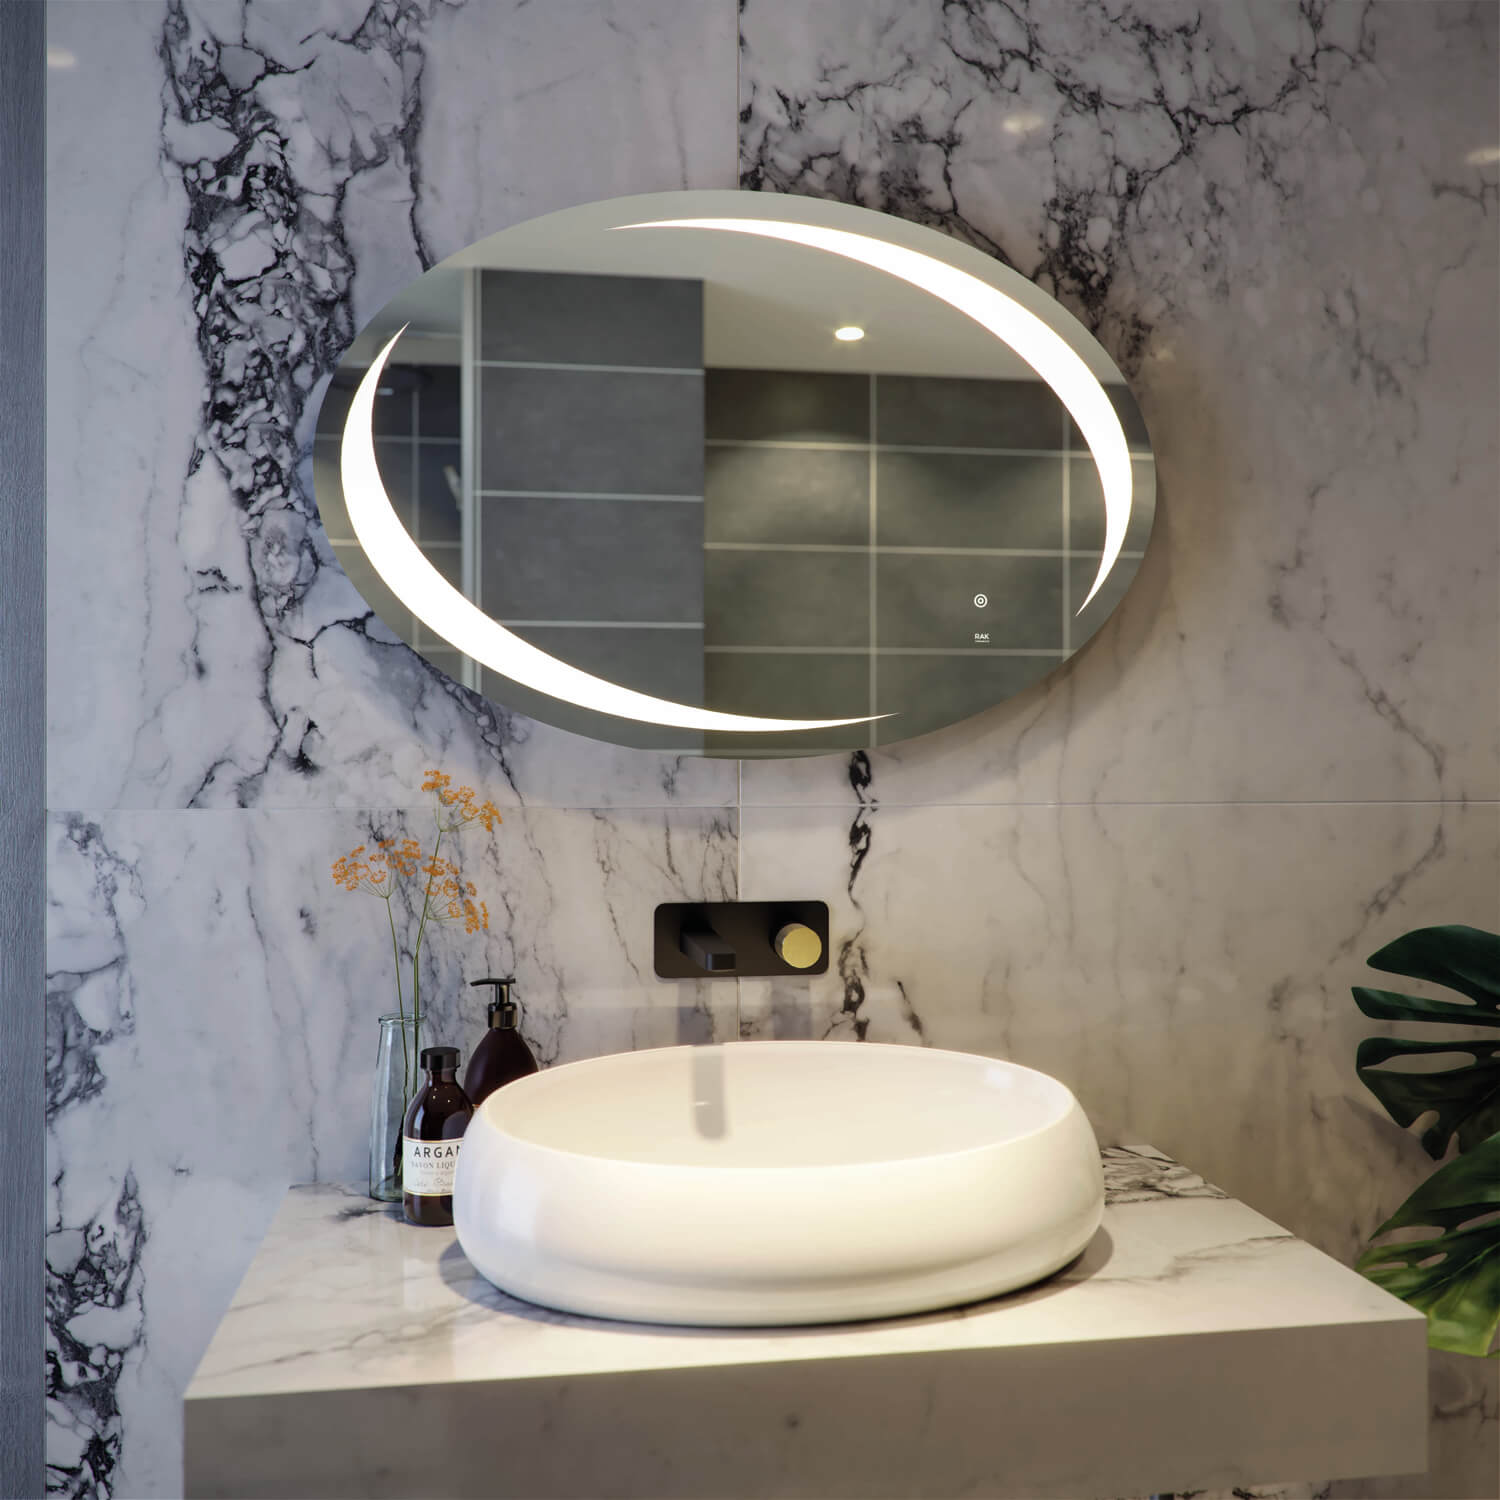 Rak Hades 900 X 600mm Led Illuminated, Bathroom Oval Mirror With Light